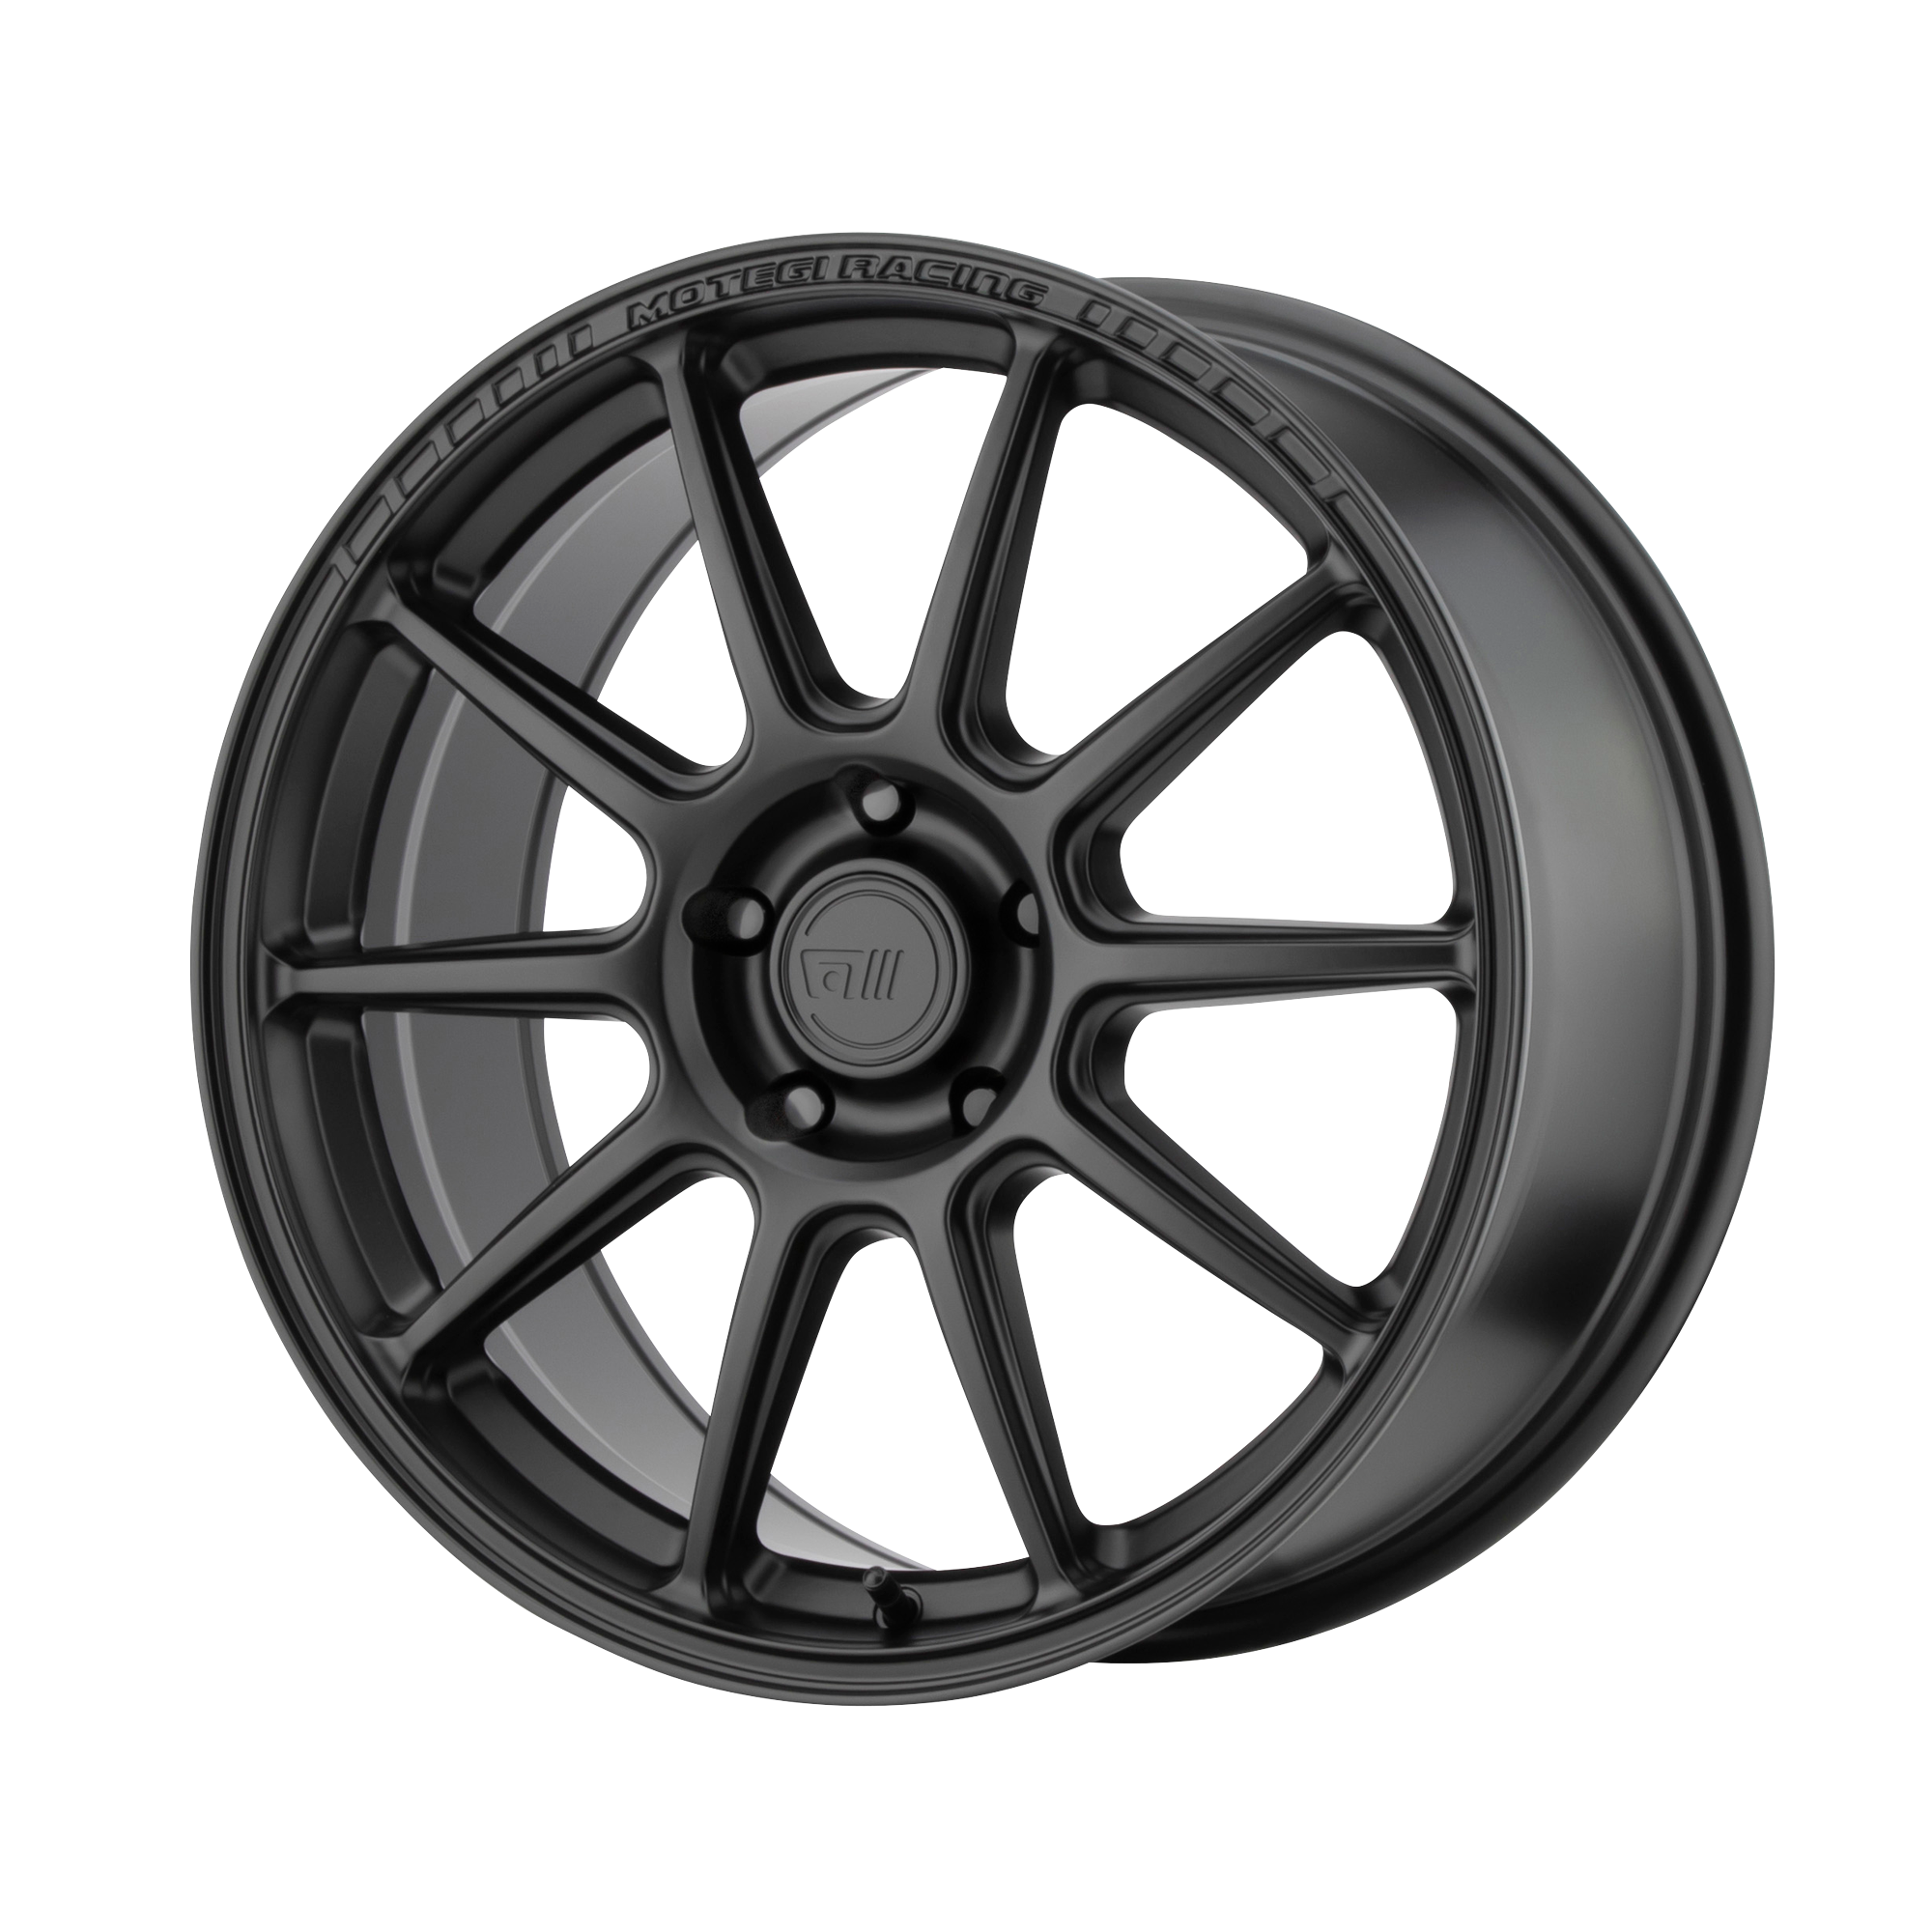 MR140 17x7 5x114.30 SATIN BLACK (38 mm) - Tires and Engine Performance